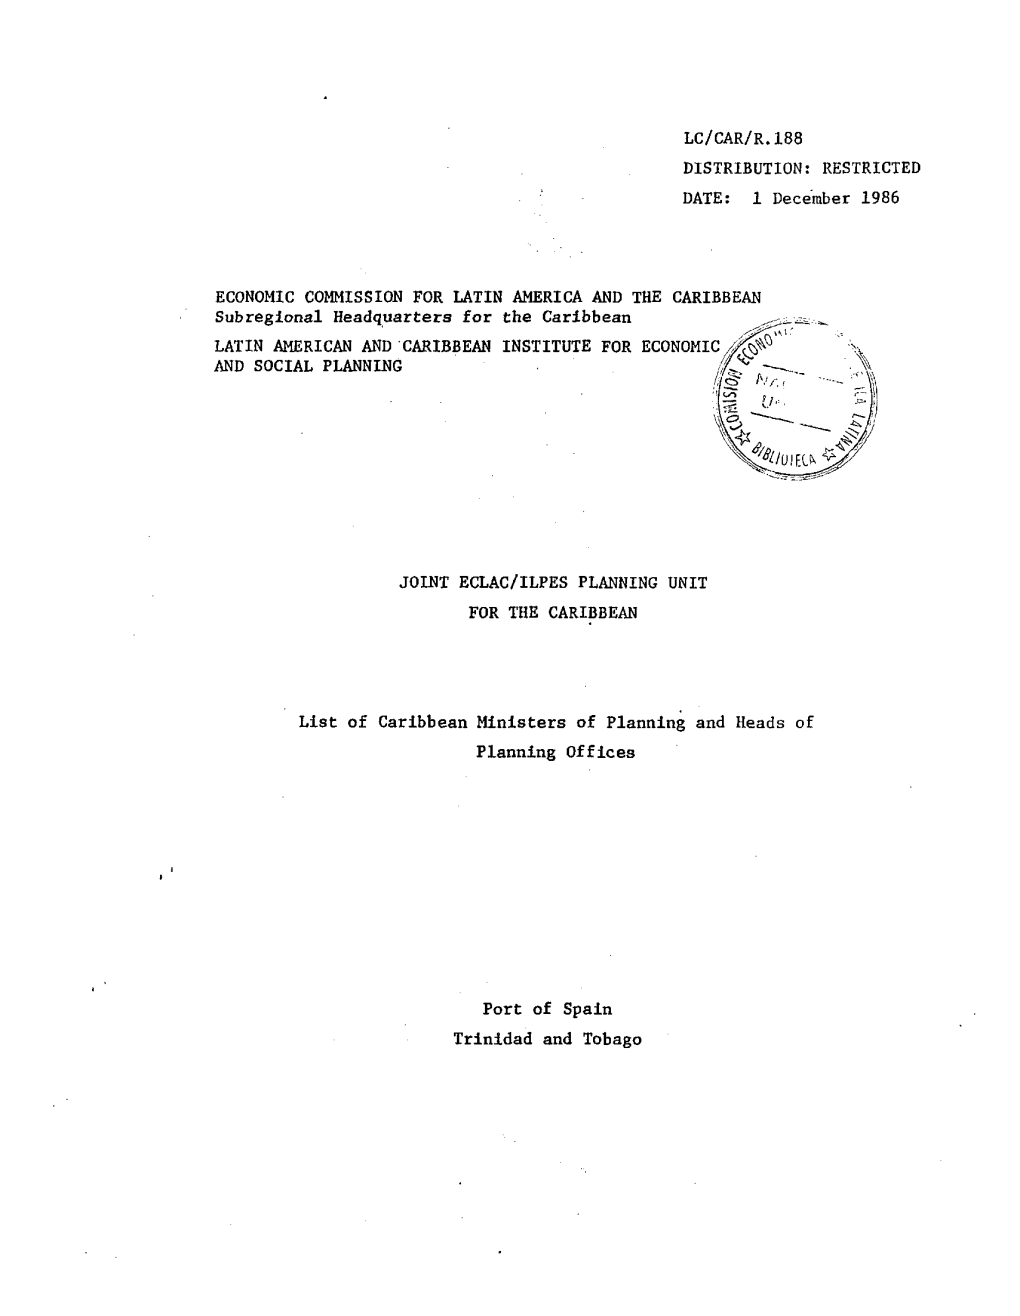 1 December 1986 ECONOMIC COMMISSION